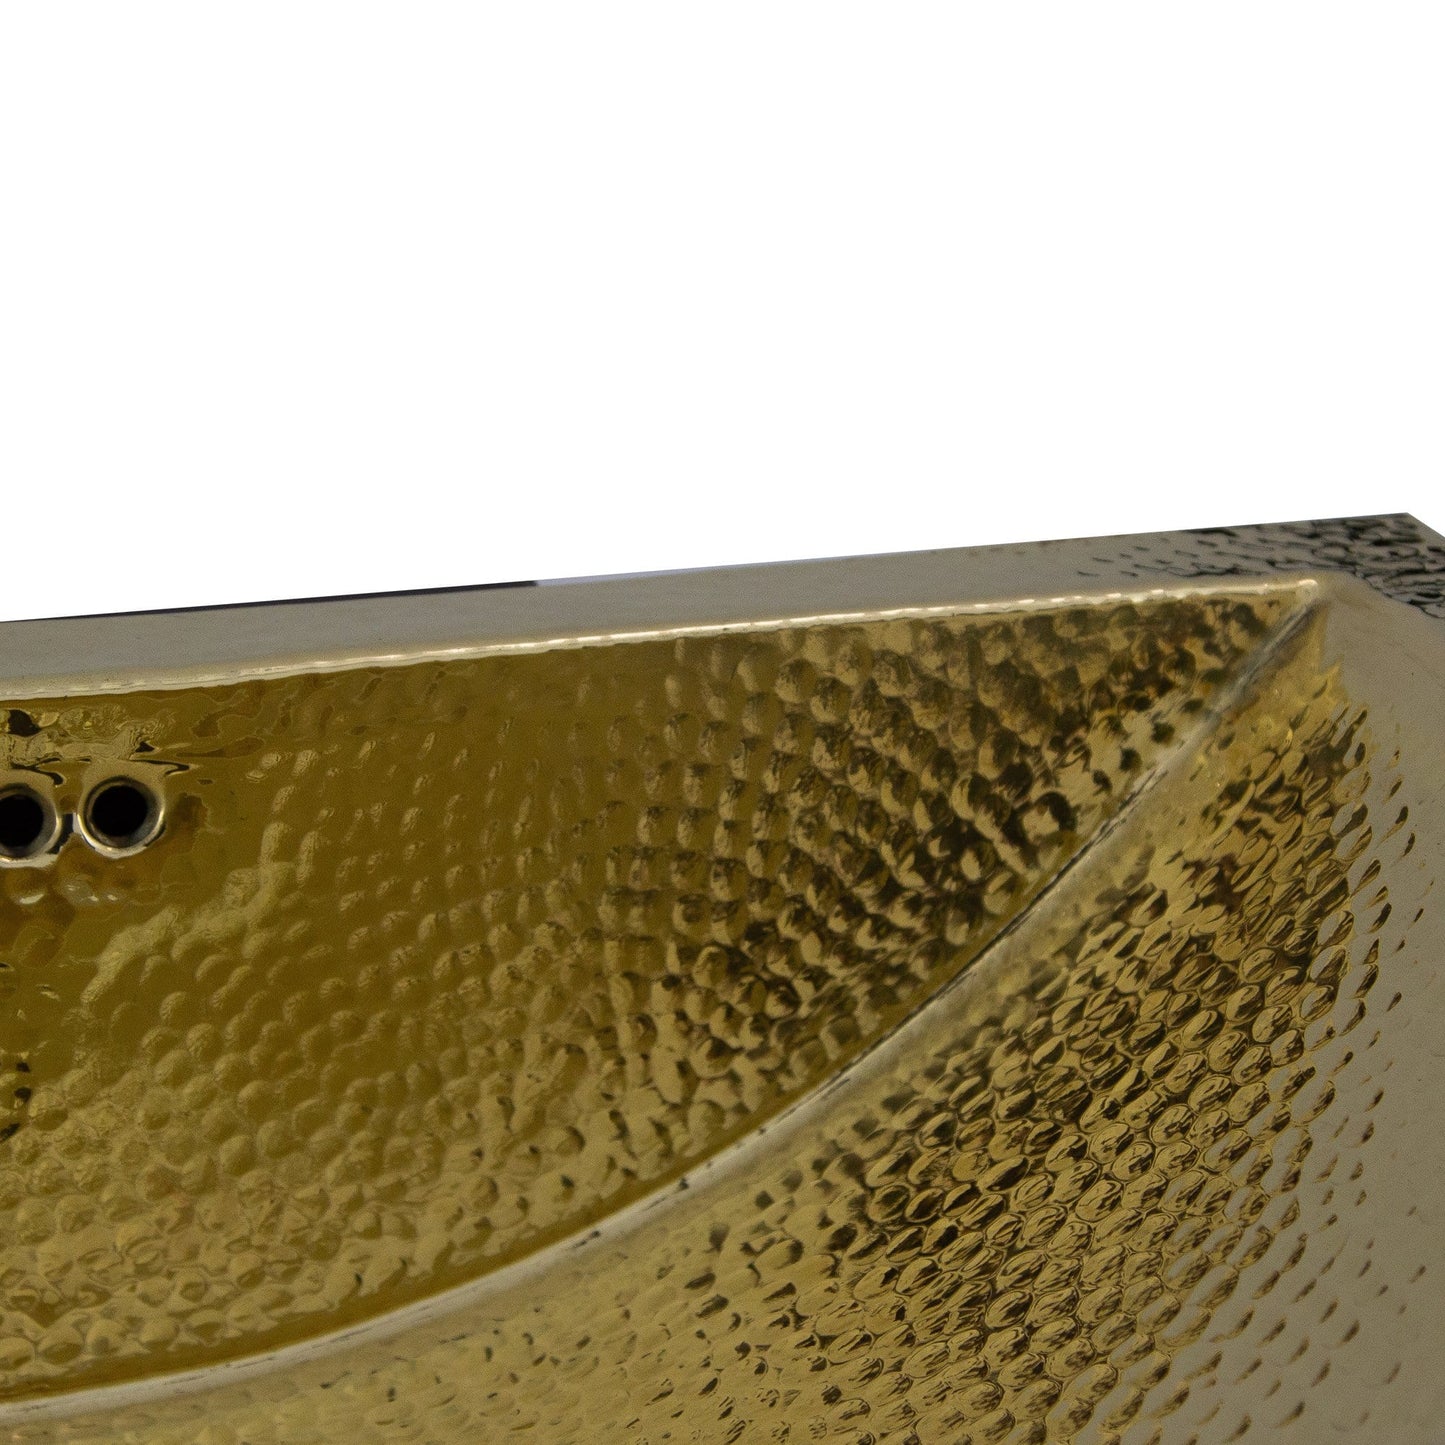 Nantucket 23.5" Hand Hammered Brass Rectangle Undermount Bathroom Sink with Overflow - TRB2416-OF